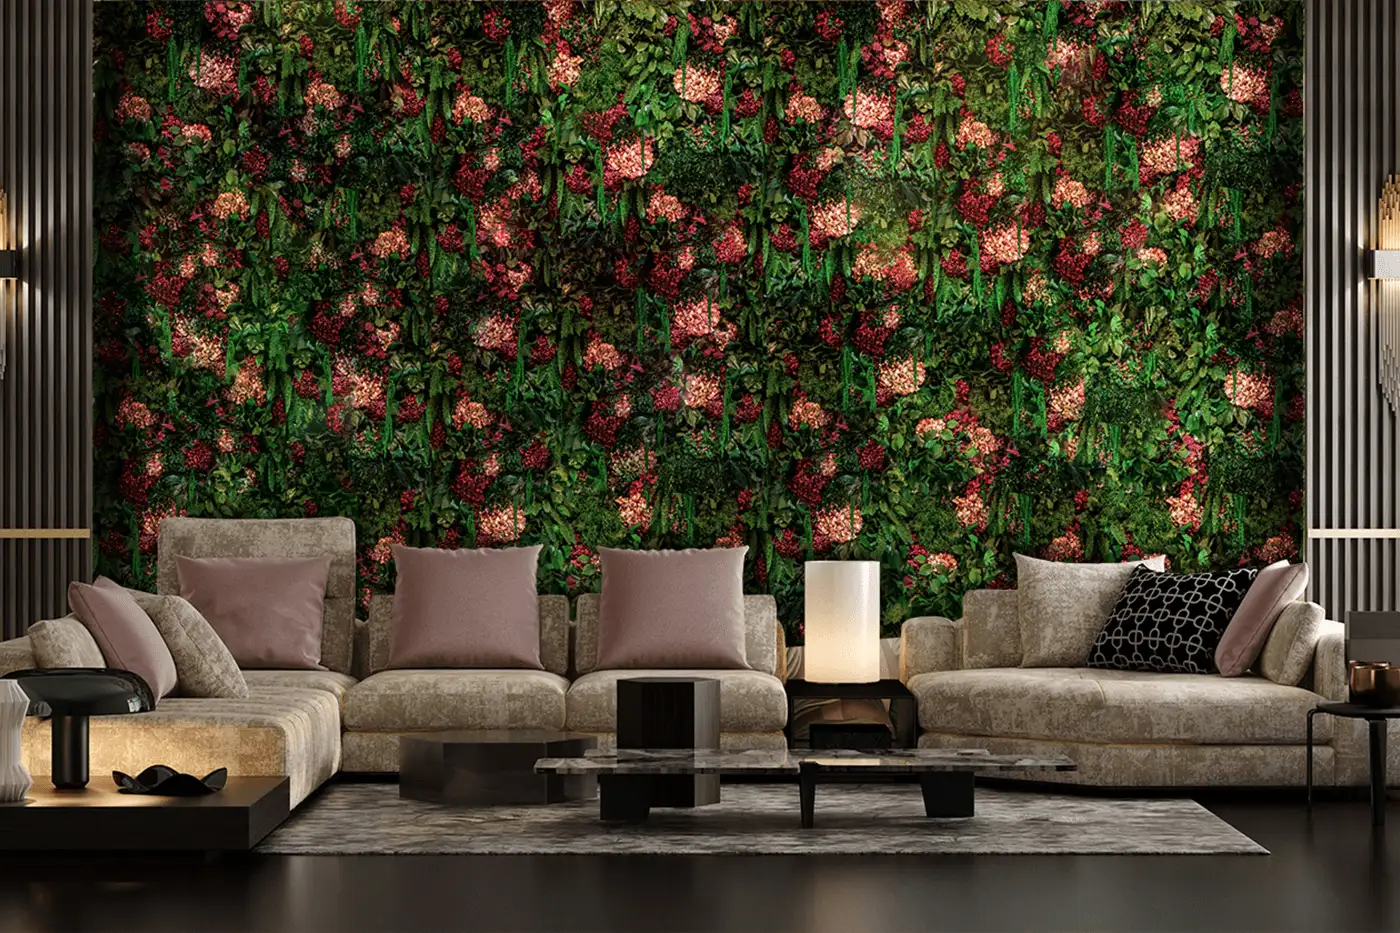 Blumenmooswand mit Couch